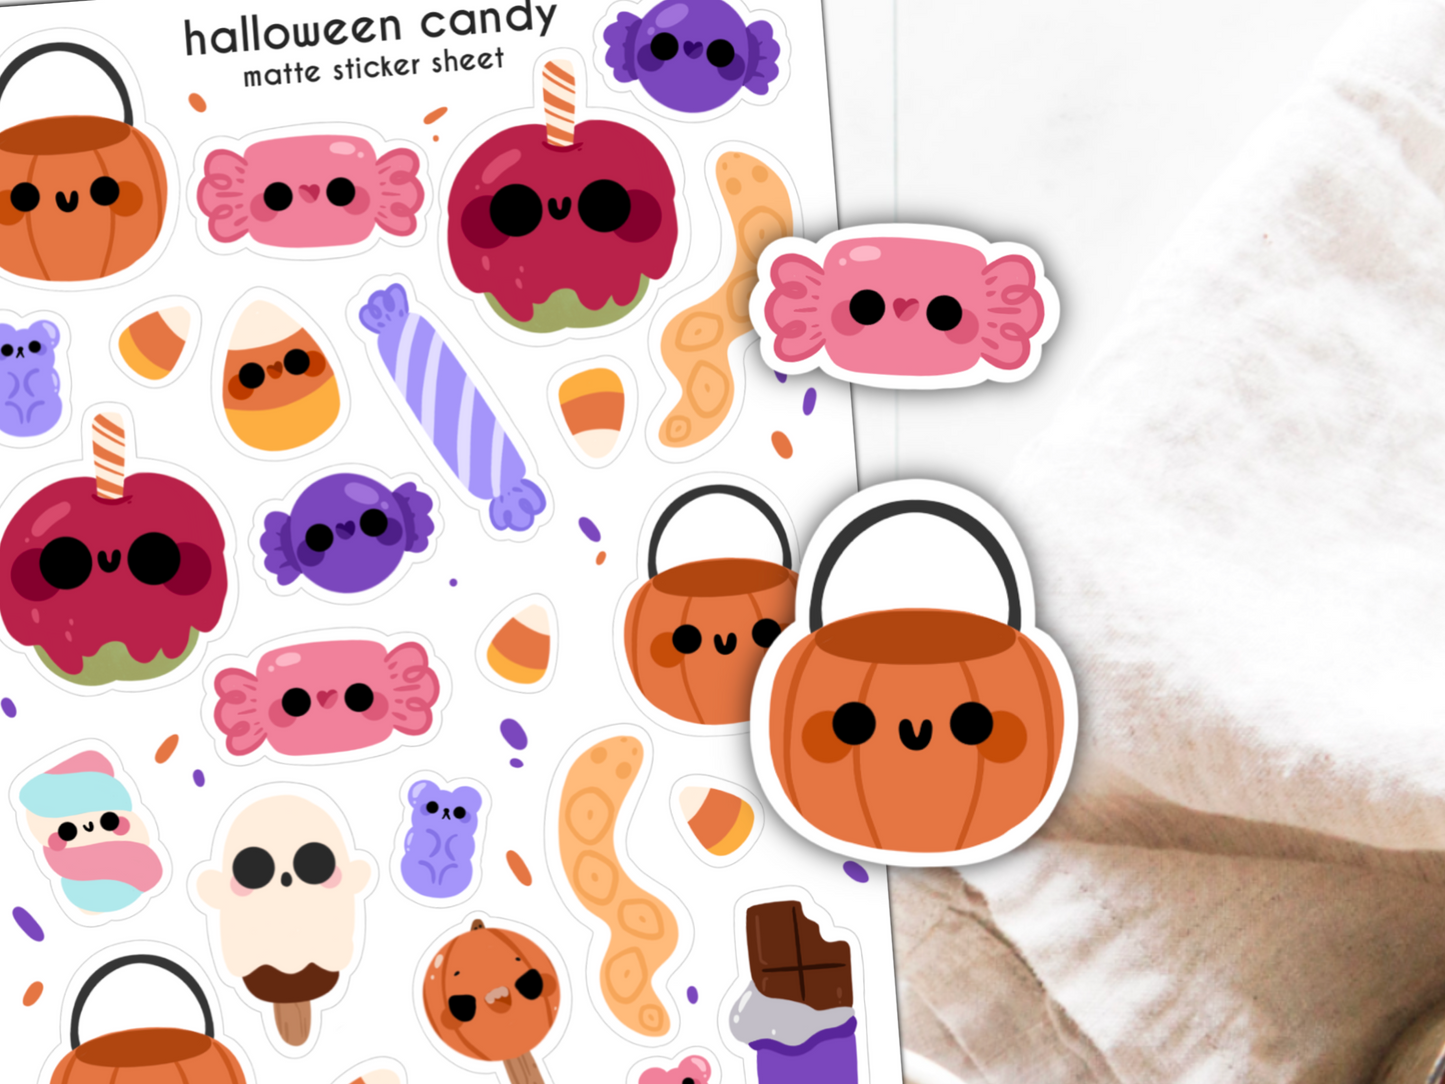 Halloween Candy Sticker Sheet | Small Planner Stickers